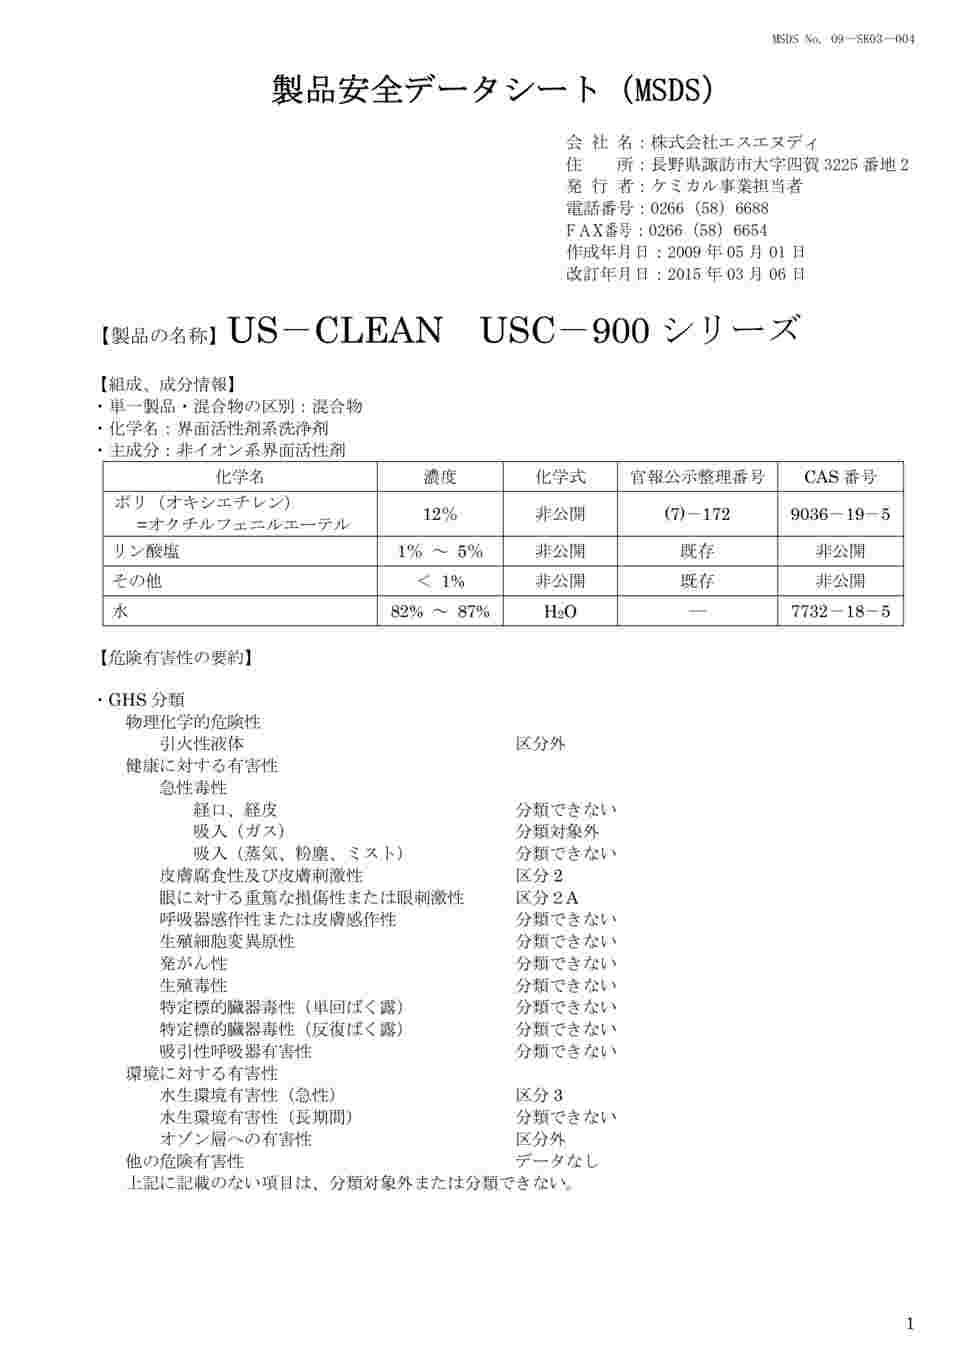 61-0084-91 US-CLEAN 水系脱脂用洗浄剤 スタンダードモデル 水溶性加工油脱脂用 USC-900シリーズ （ポリ容器タイプ） USC-902